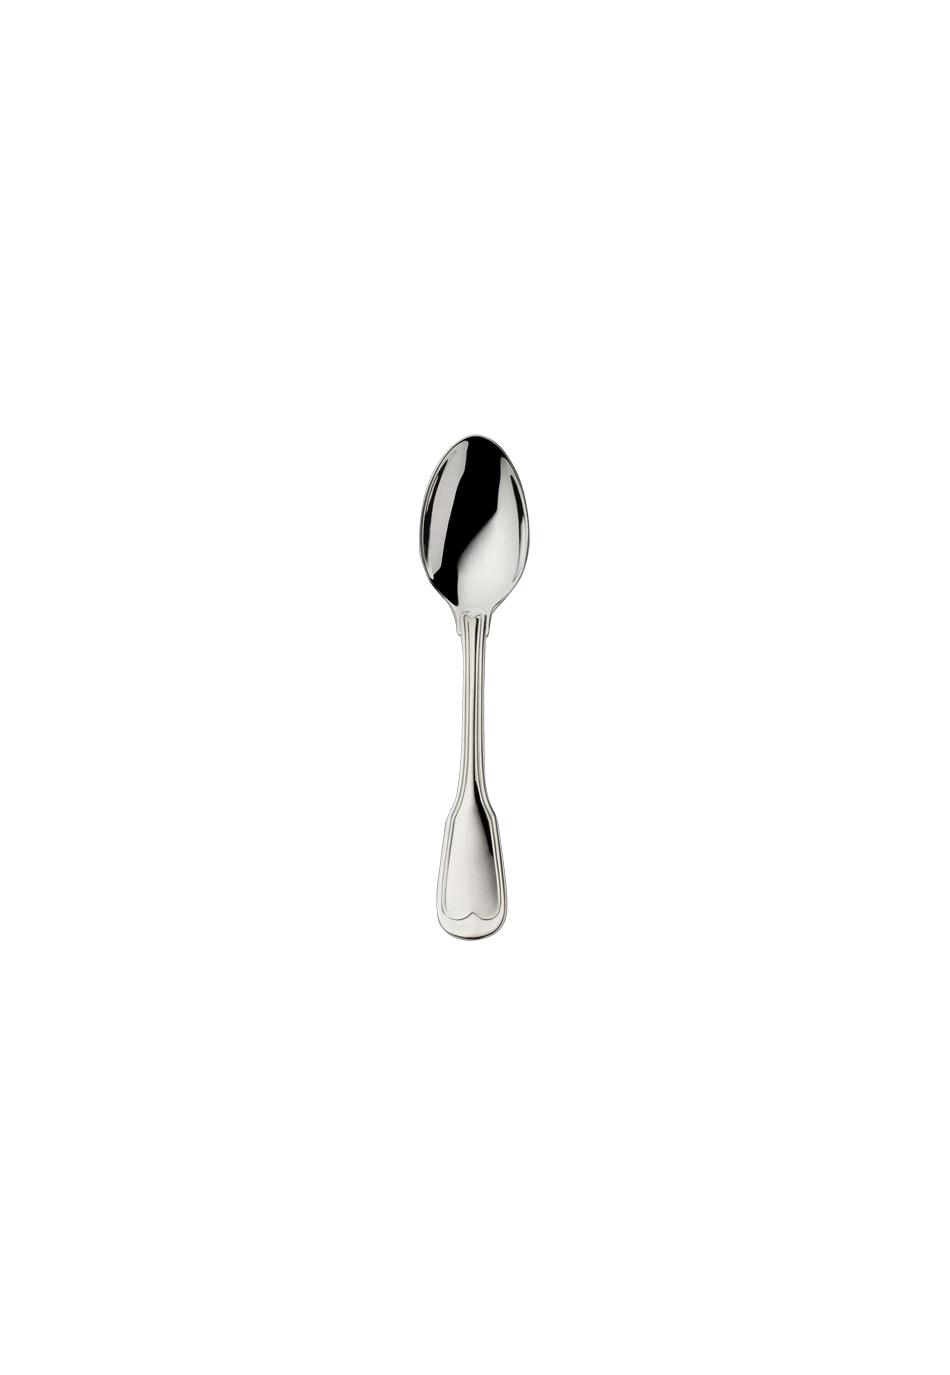 Alt-Faden Mocha Spoon 10,5 Cm (150g massive silverplated)